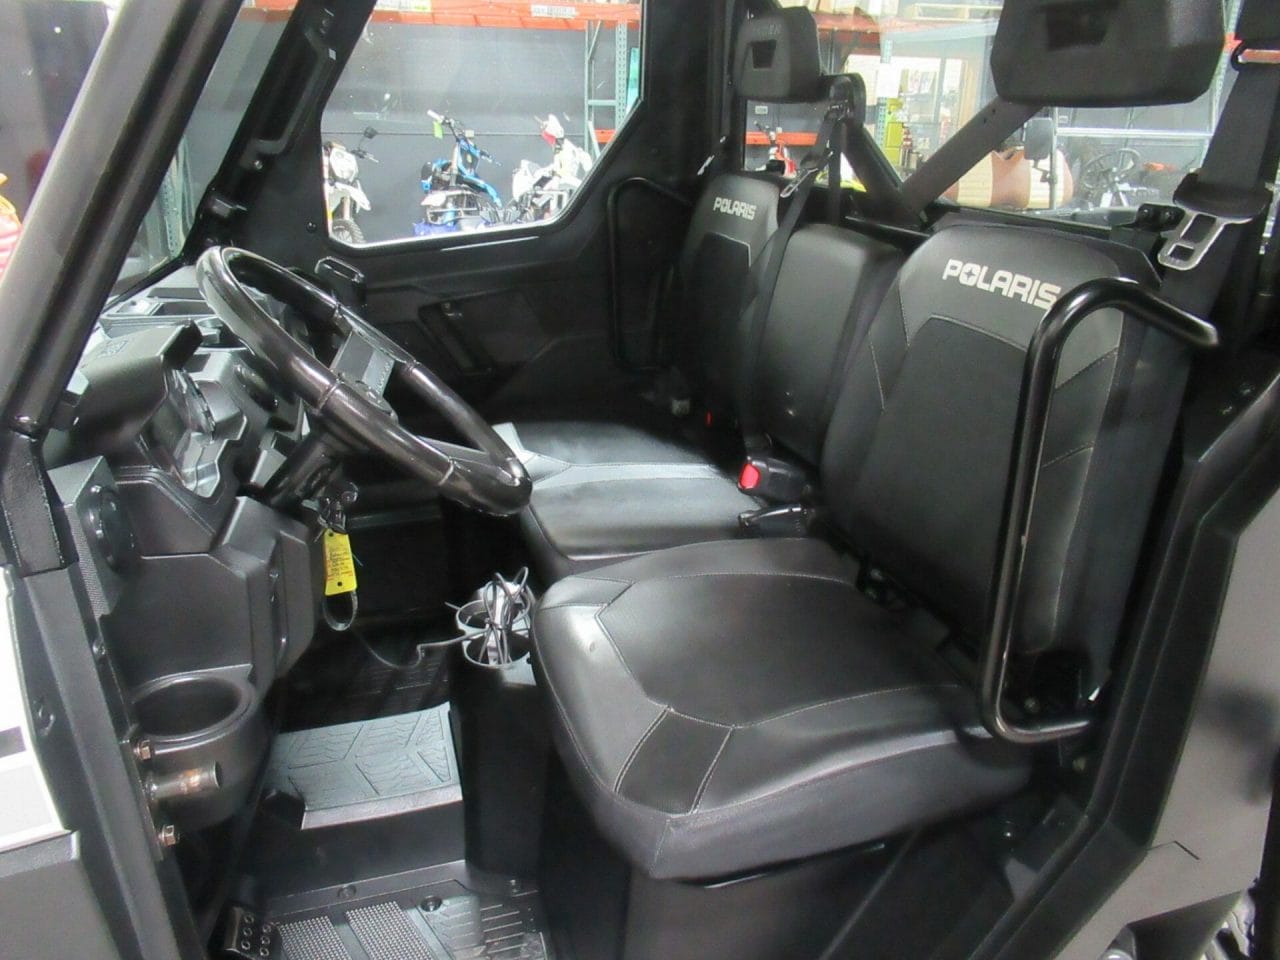 2019 Polaris Ranger 1000 XP EPS * Full Hard Cab w/ Heater *